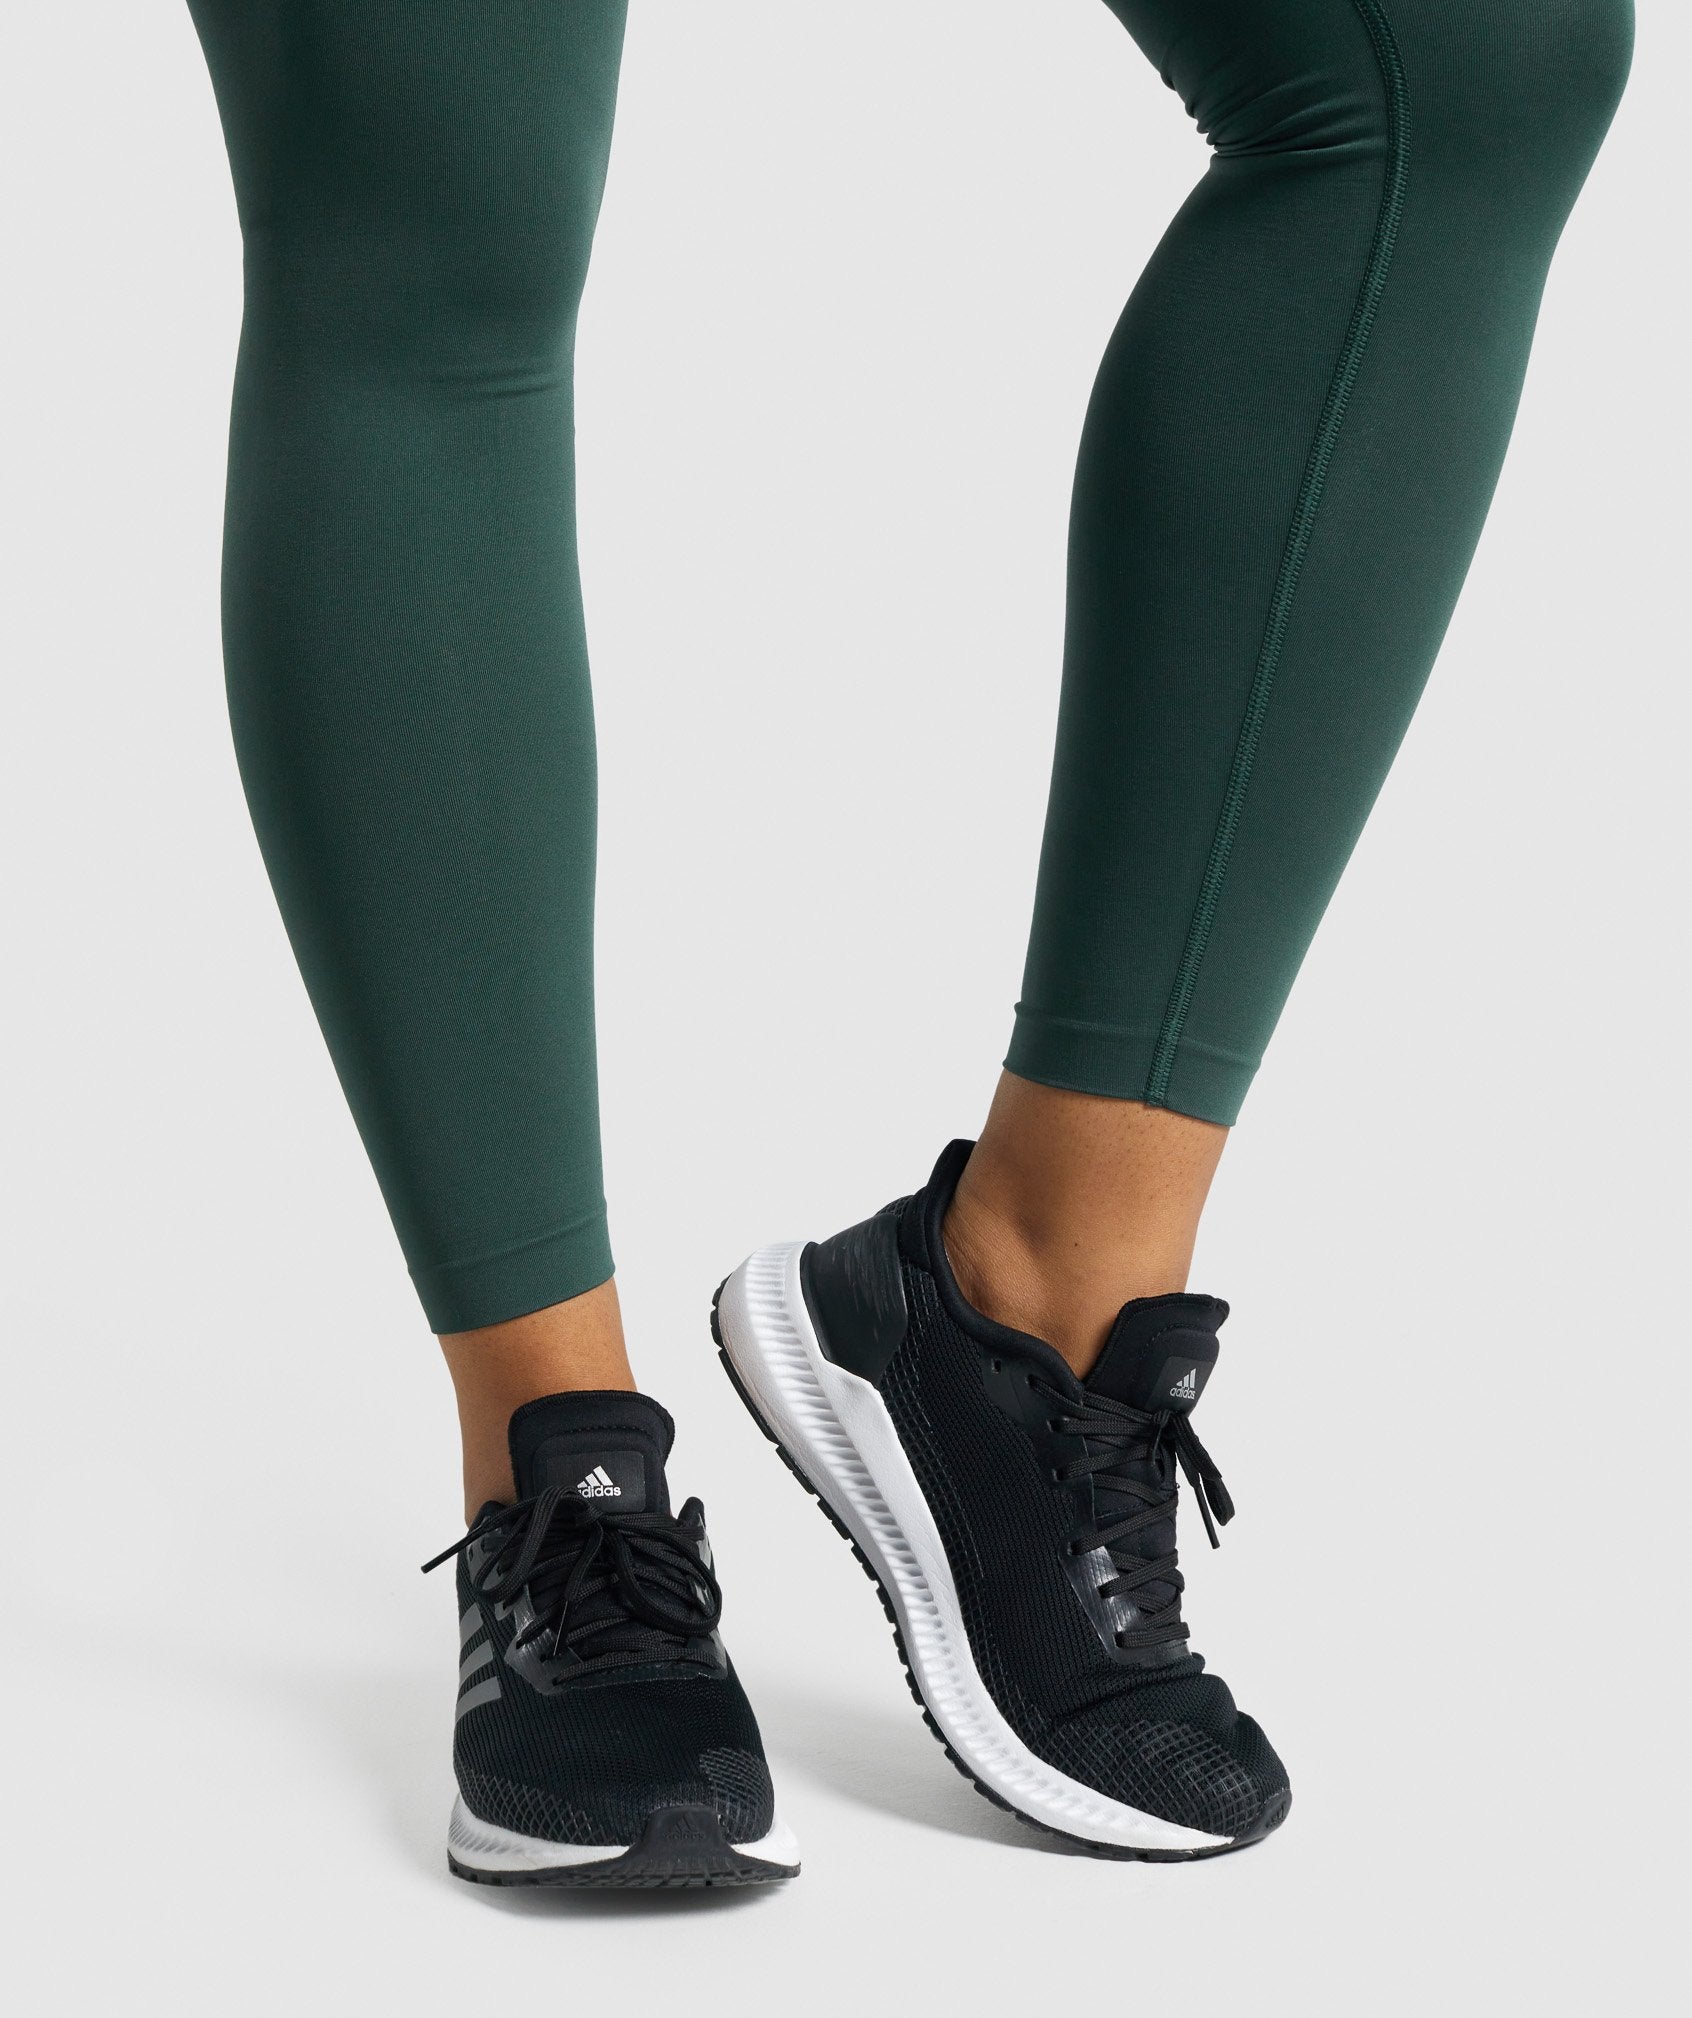 Gymshark Medium 600/= ❗ SOLD 🔥 ❗ High-waisted Seamless leggings